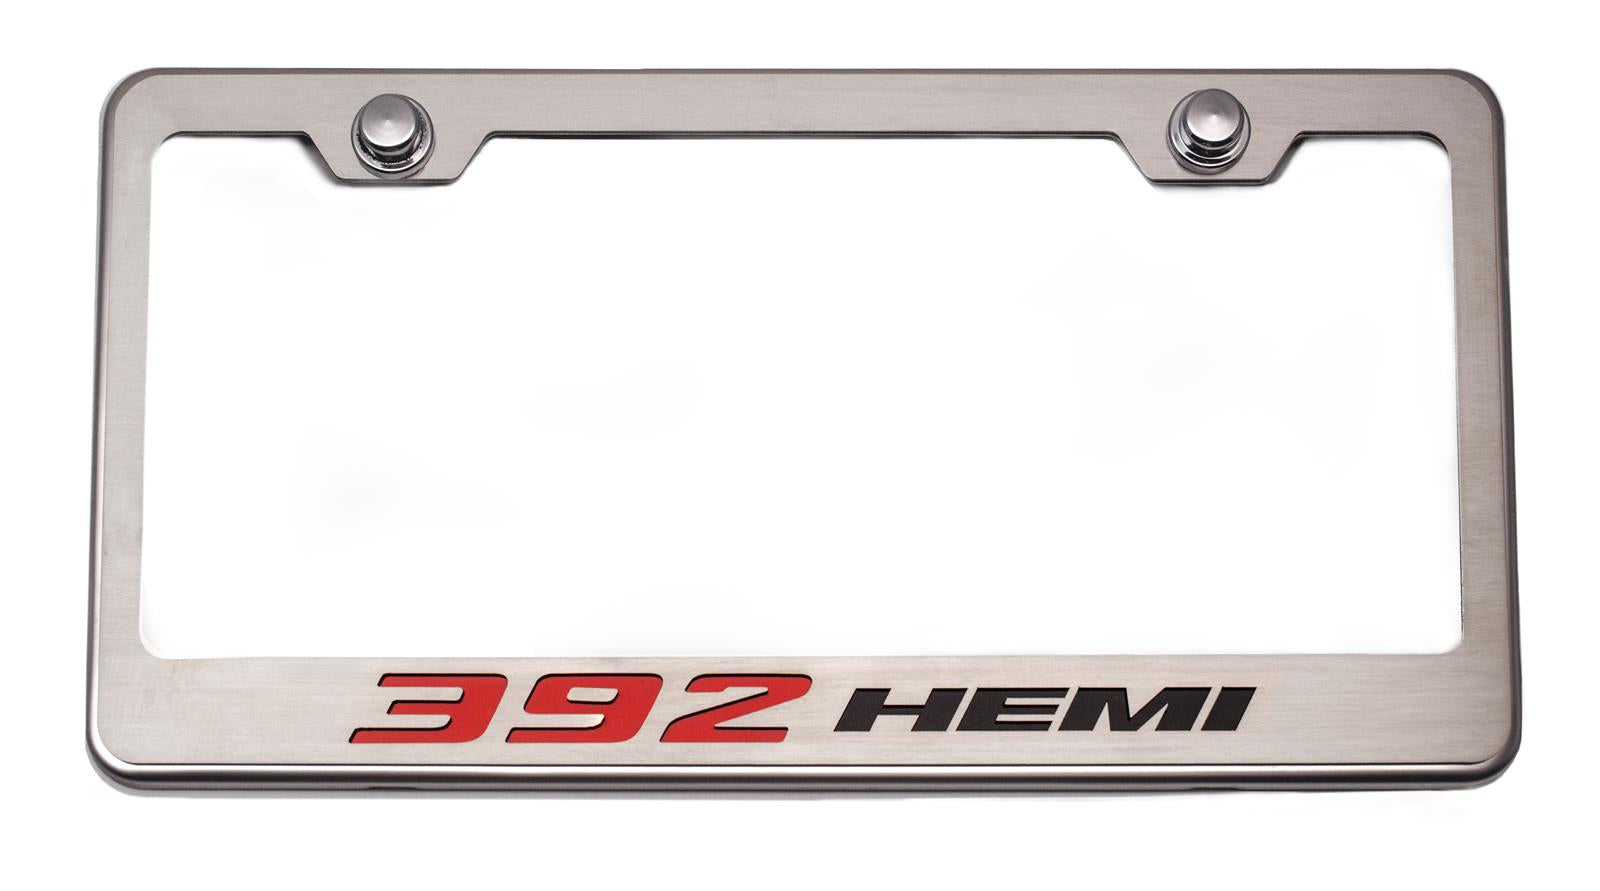 American Car Craft Stainless Steel 392 Hemi License Plate Frame